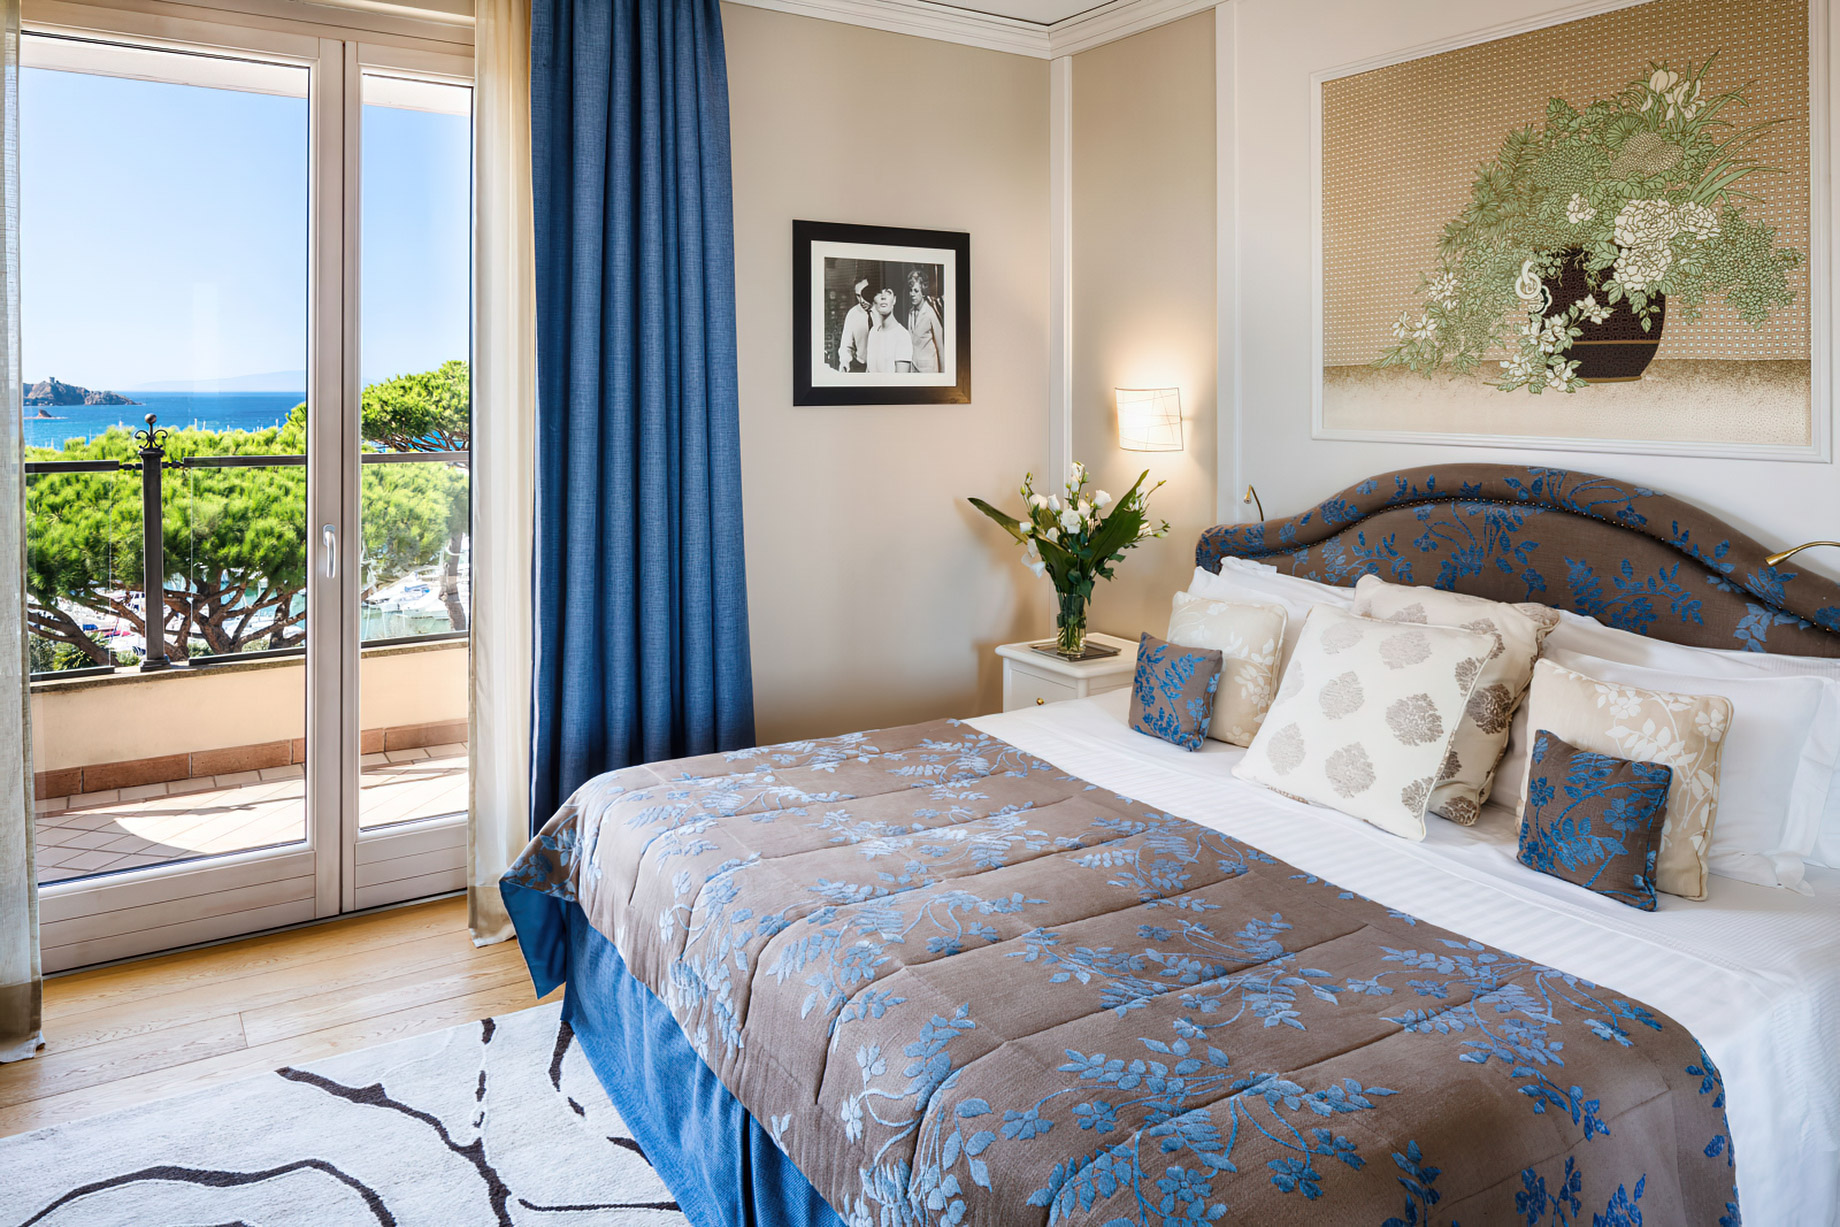 Baglioni Resort Cala del Porto Tuscany – Punta Ala, Italy – Panoramic Sea View Suite Bedroom View